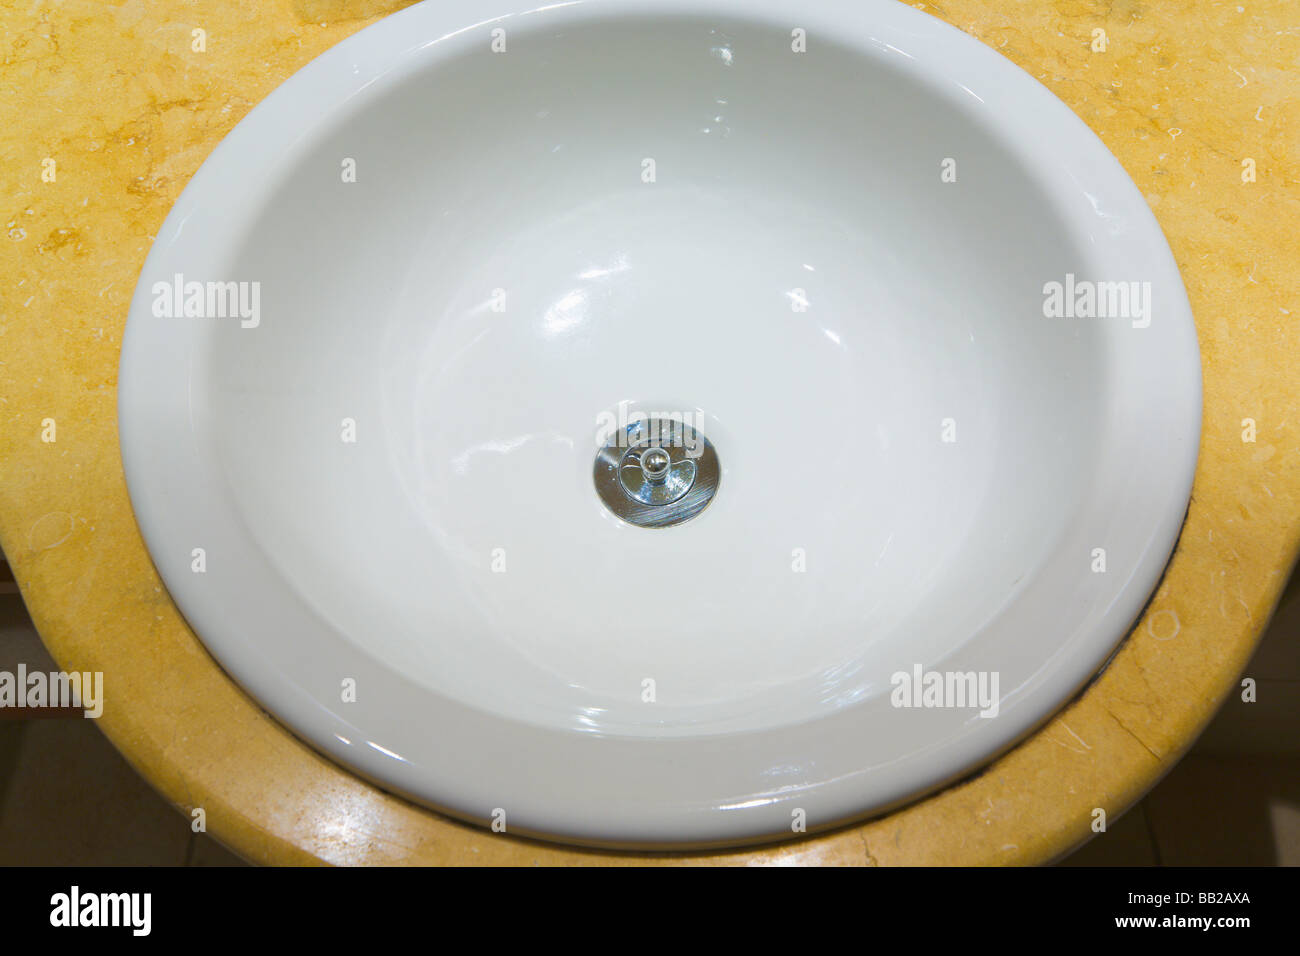 Ceramic wash basin in a bathroom Stock Photo